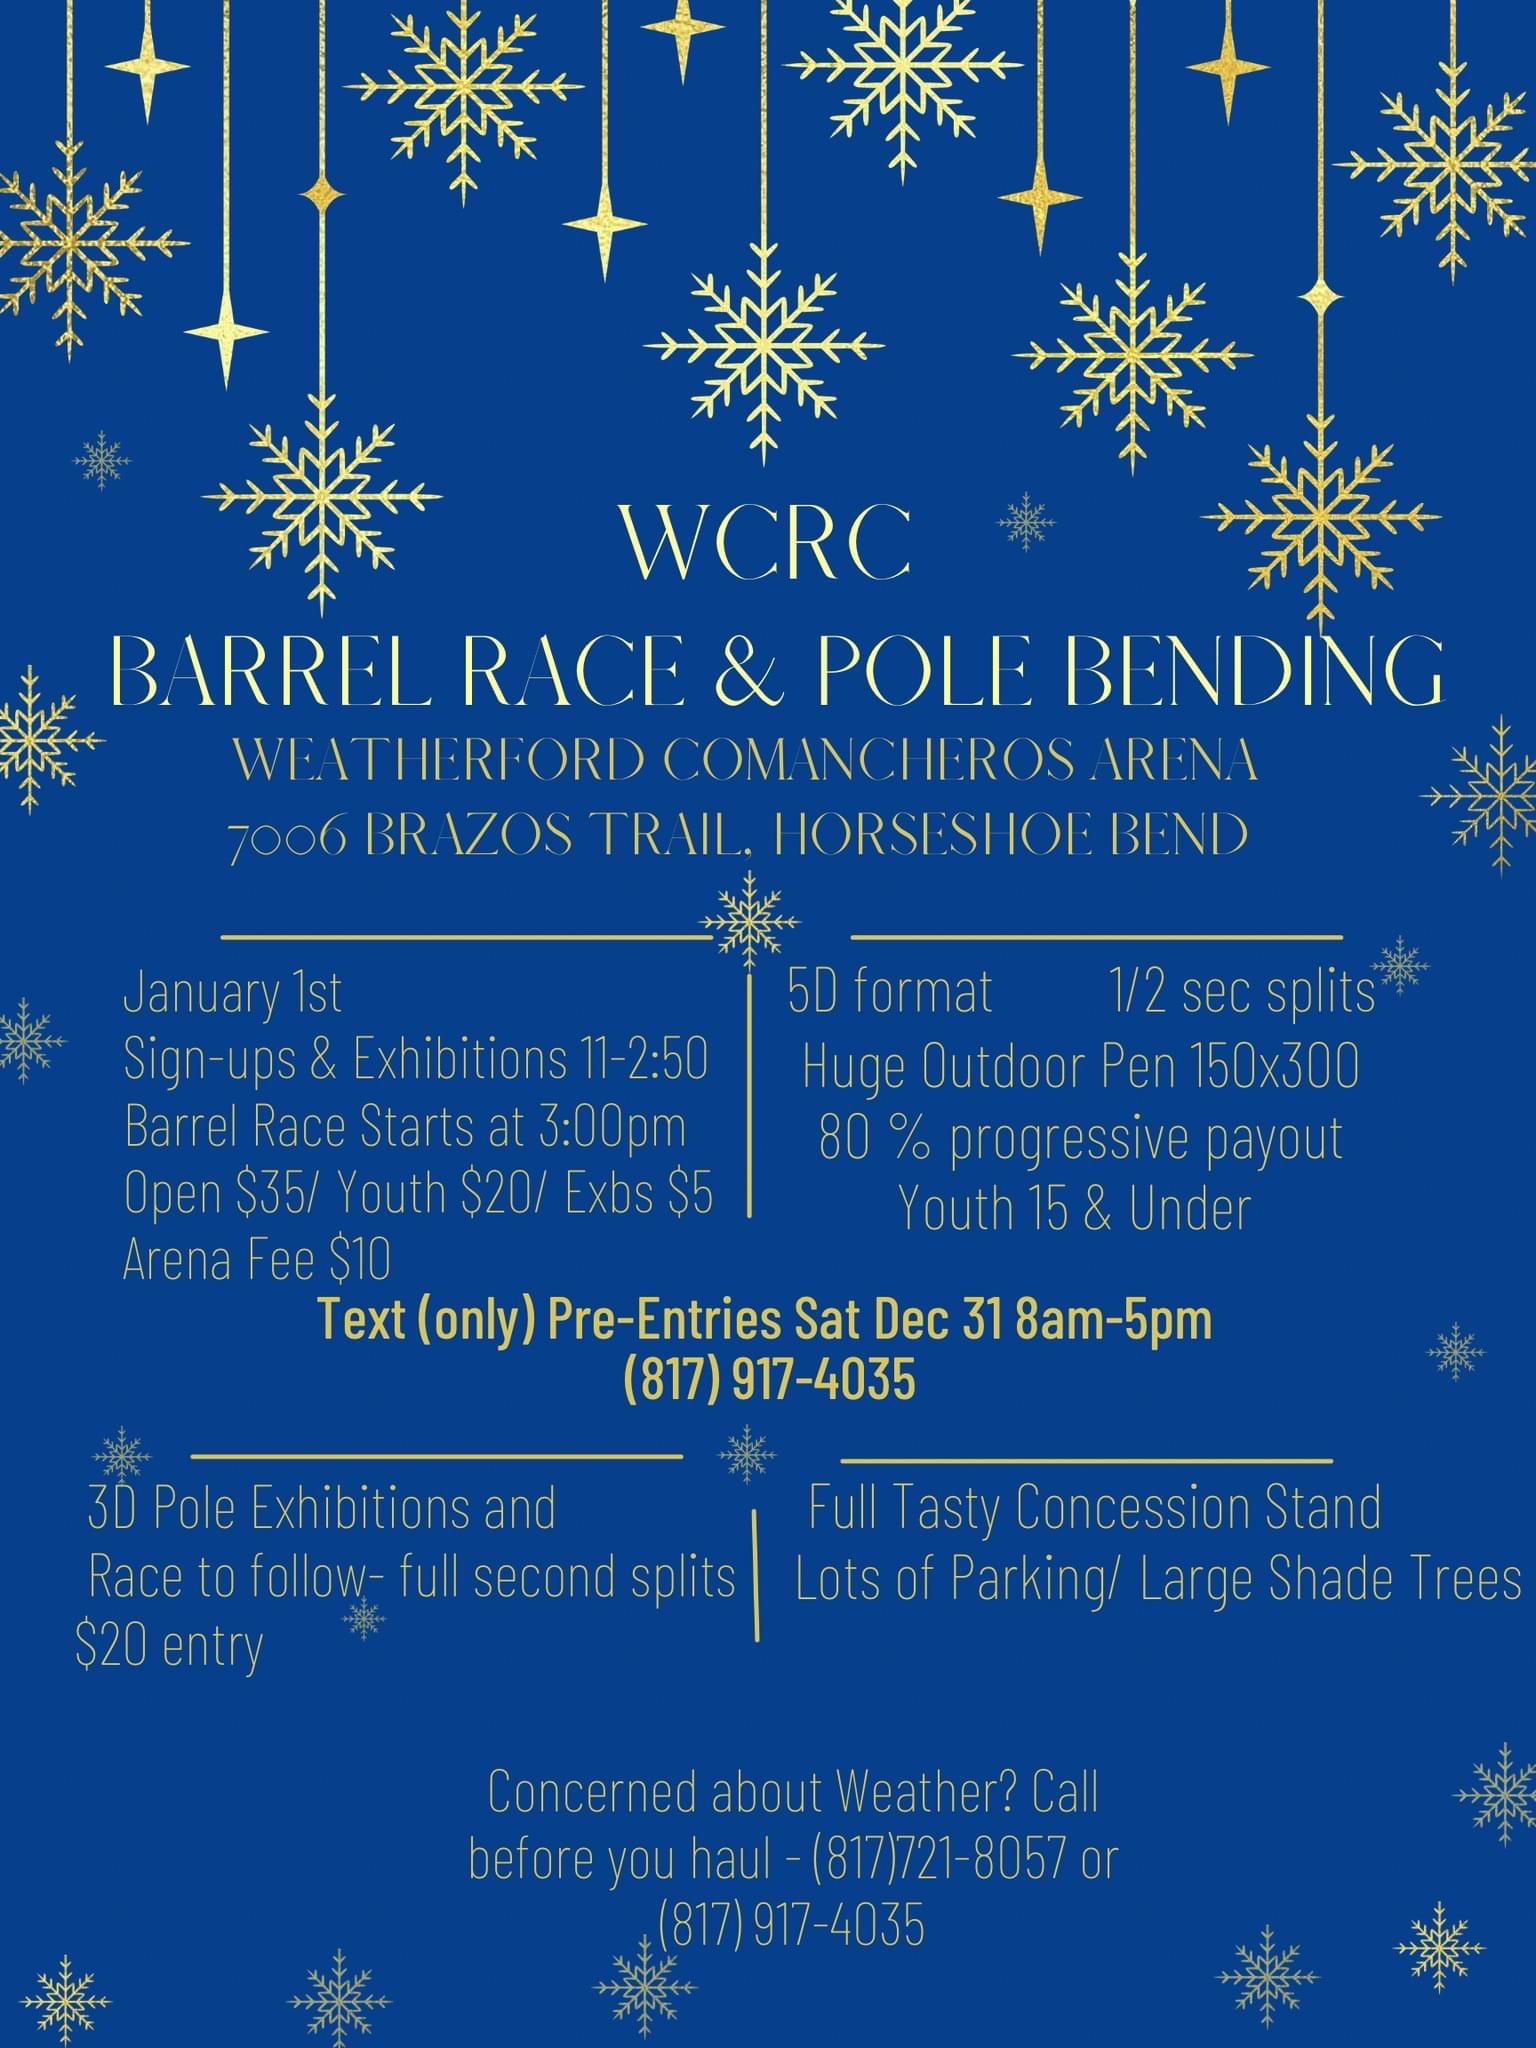 WCRC Barrel Race & Poles